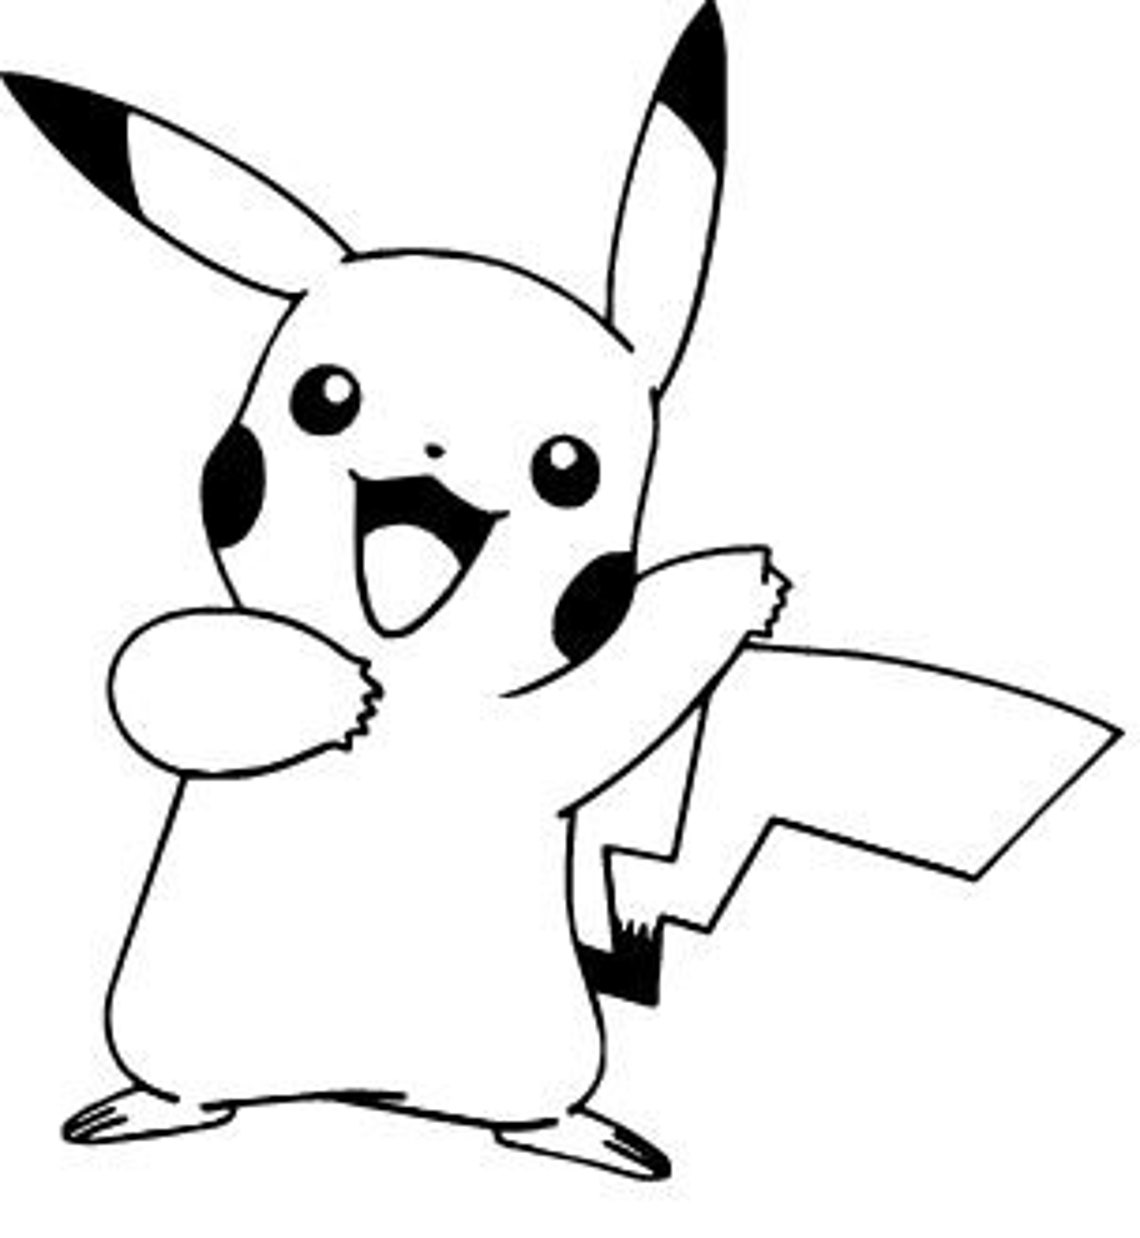 Pikachu SVG Black and White | Etsy